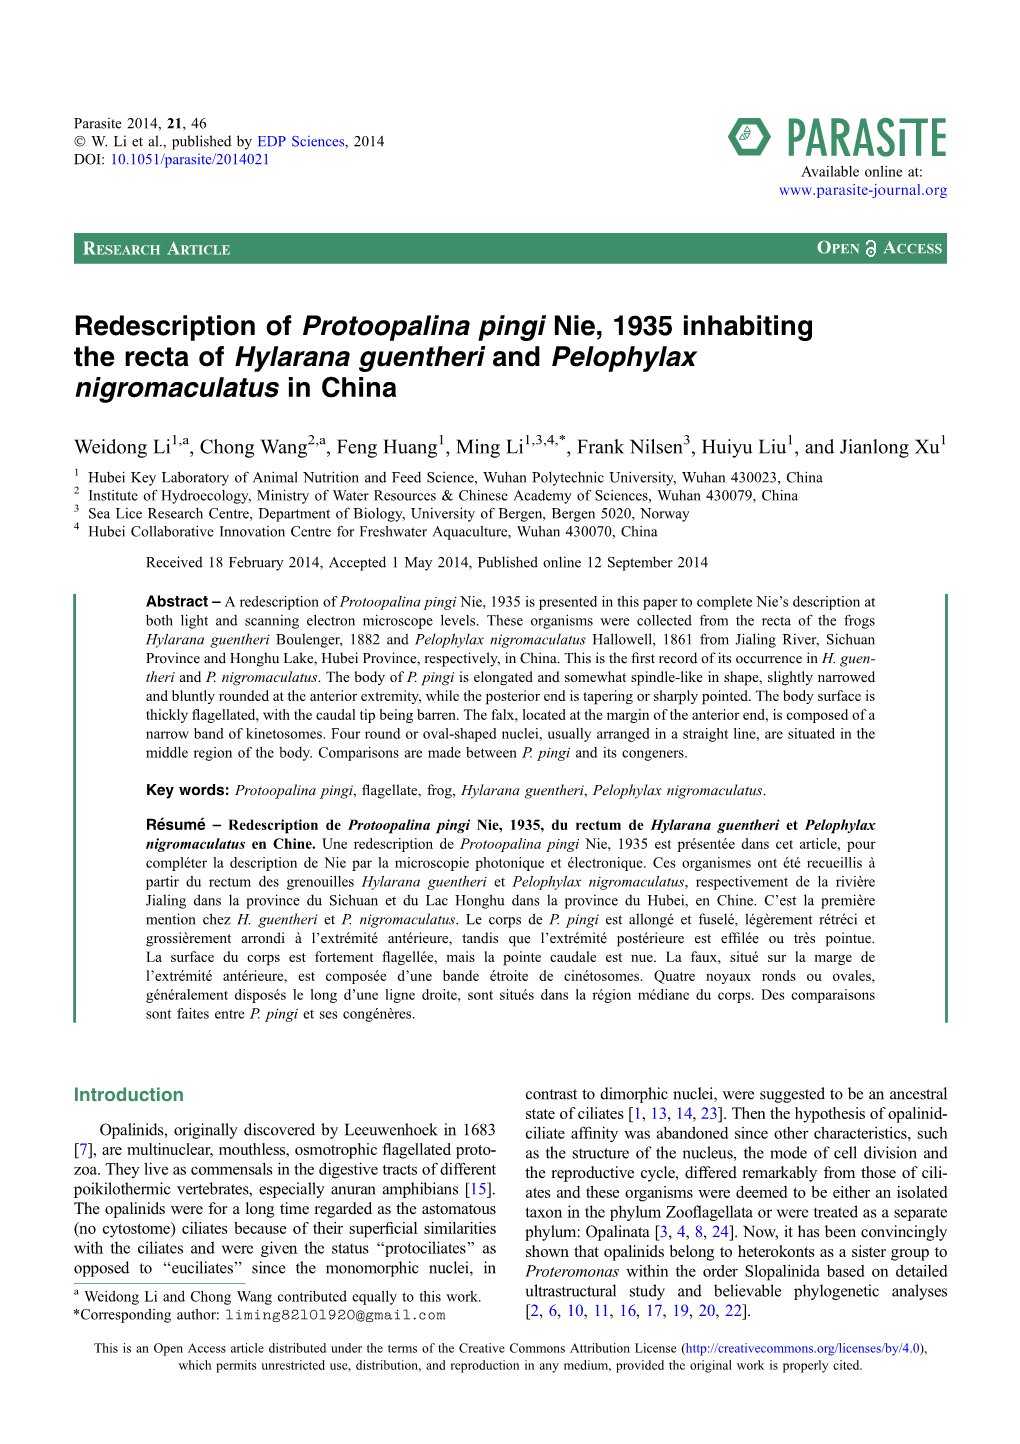 Redescription of Protoopalina Pingi Nie, 1935 Inhabiting the Recta of Hylarana Guentheri and Pelophylax Nigromaculatus in China